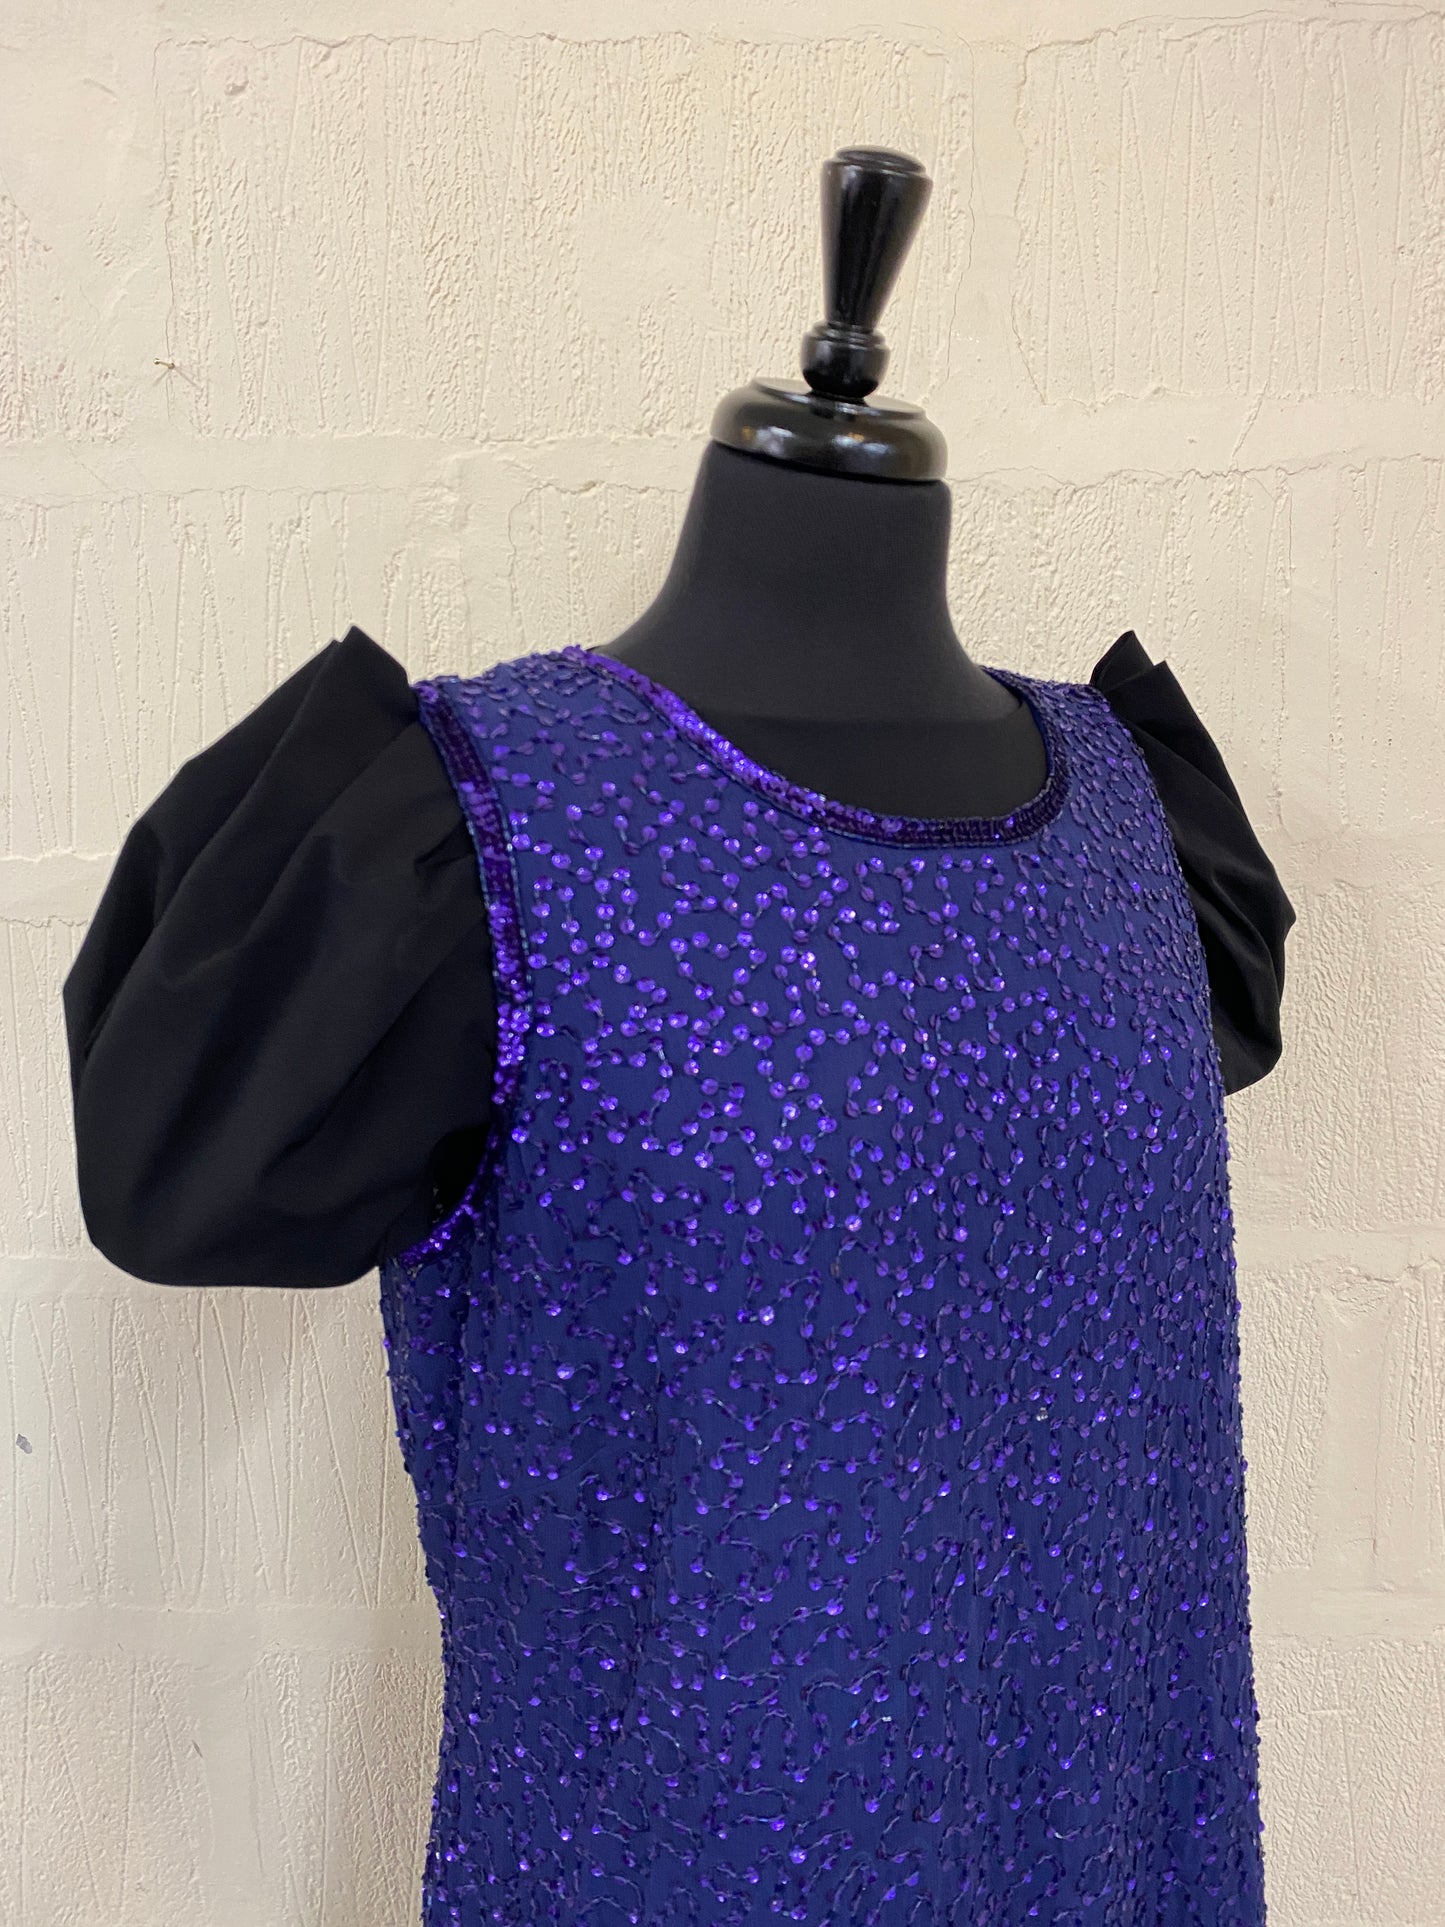 BNWT Purple Sequin Sleeveless Party Dress Size 16-18